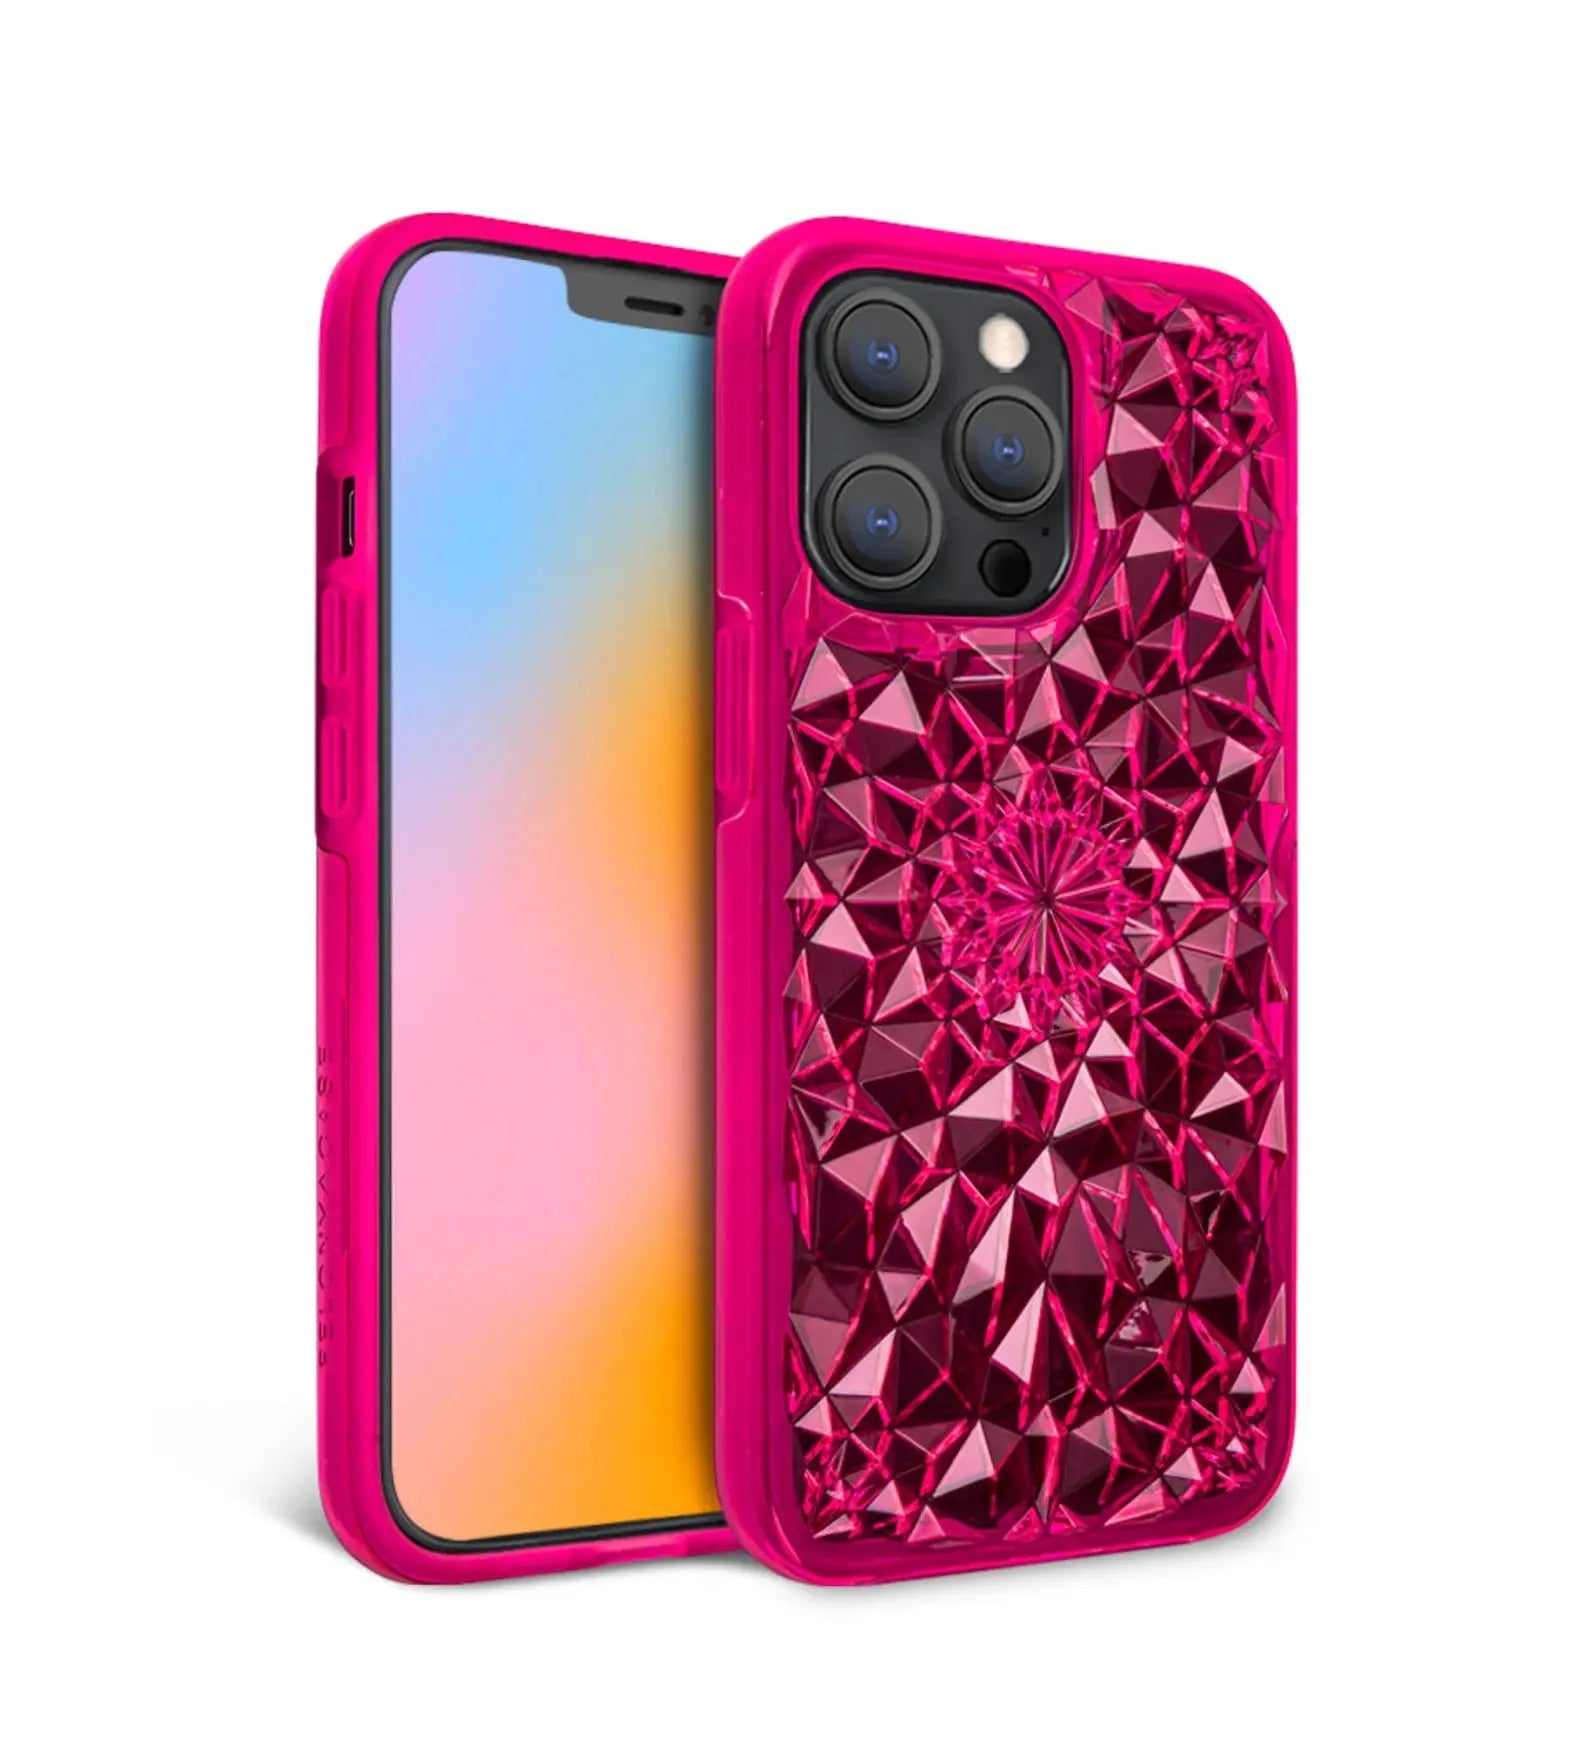 Neon Pink Kaleidoscope iPhone Case Anacotte